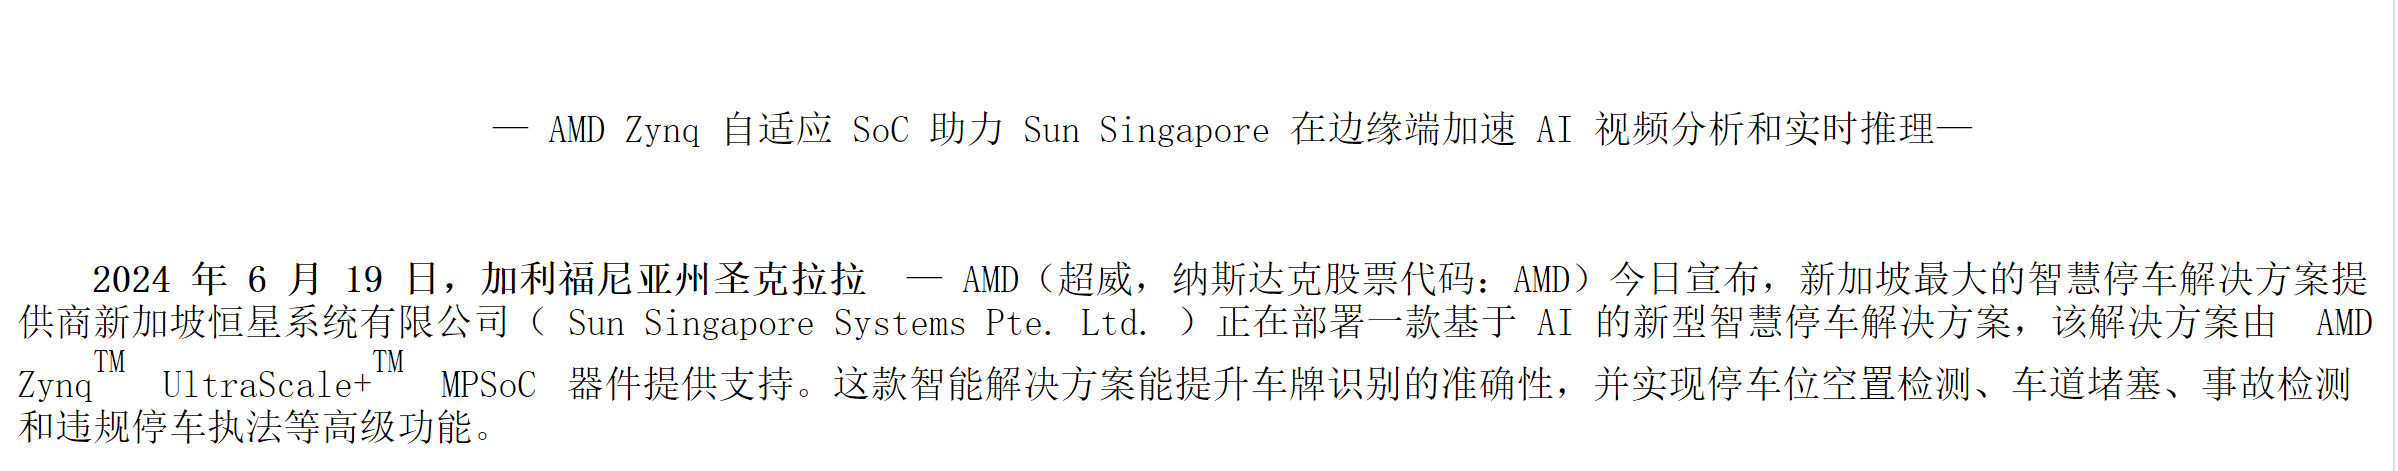 AMD 助力新加坡最大的智慧停车服务提供商 Sun Singapore 基于 AI 的智慧停车解决方案